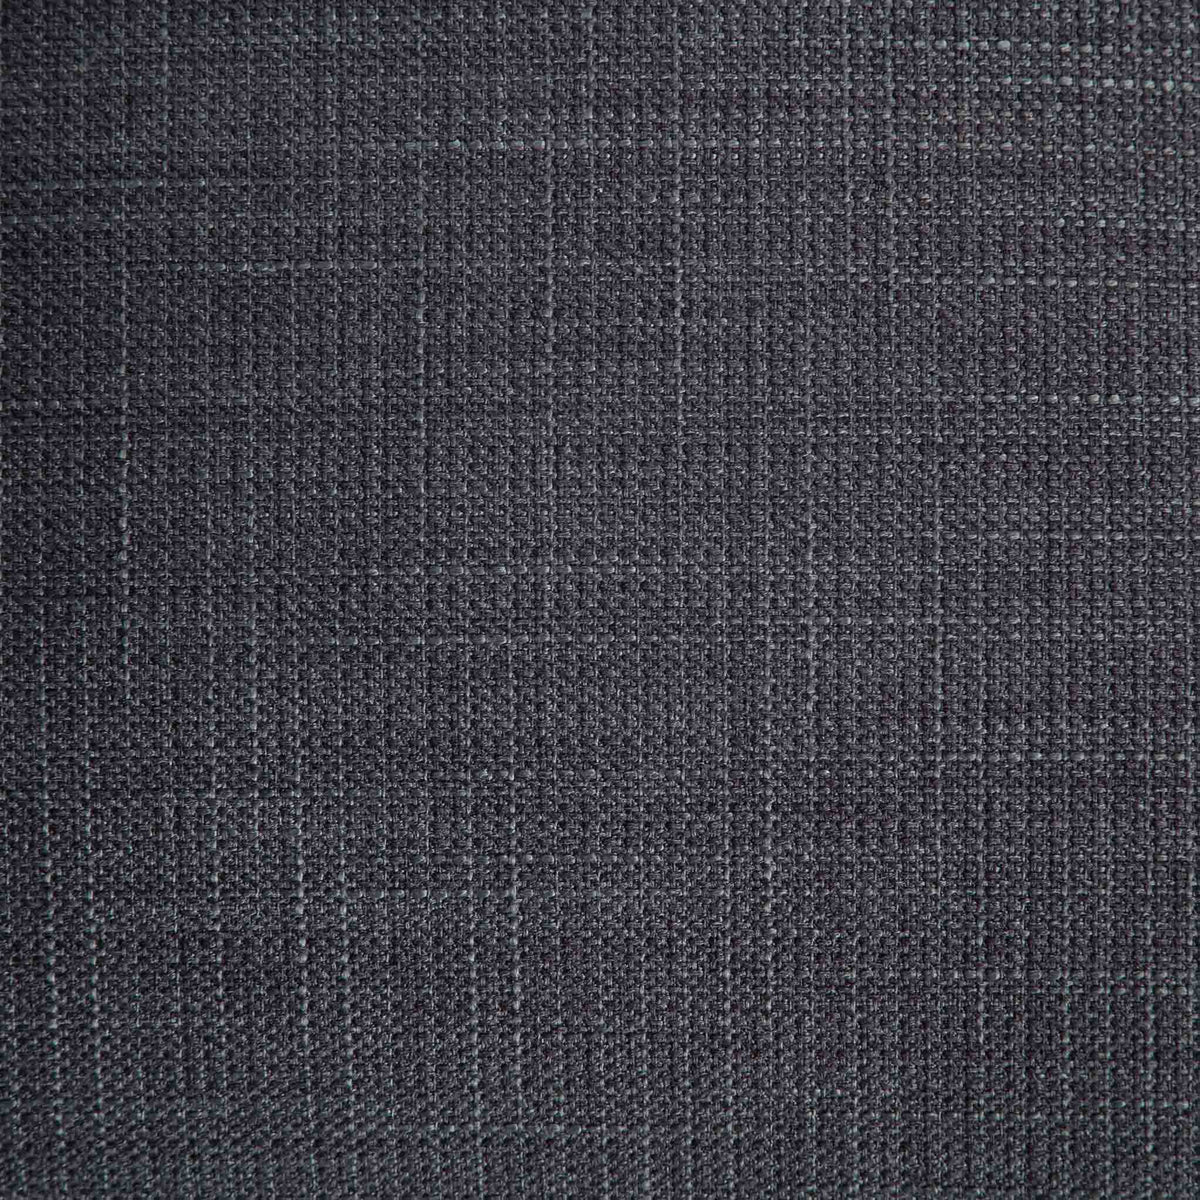 close up of black padded seat fabric